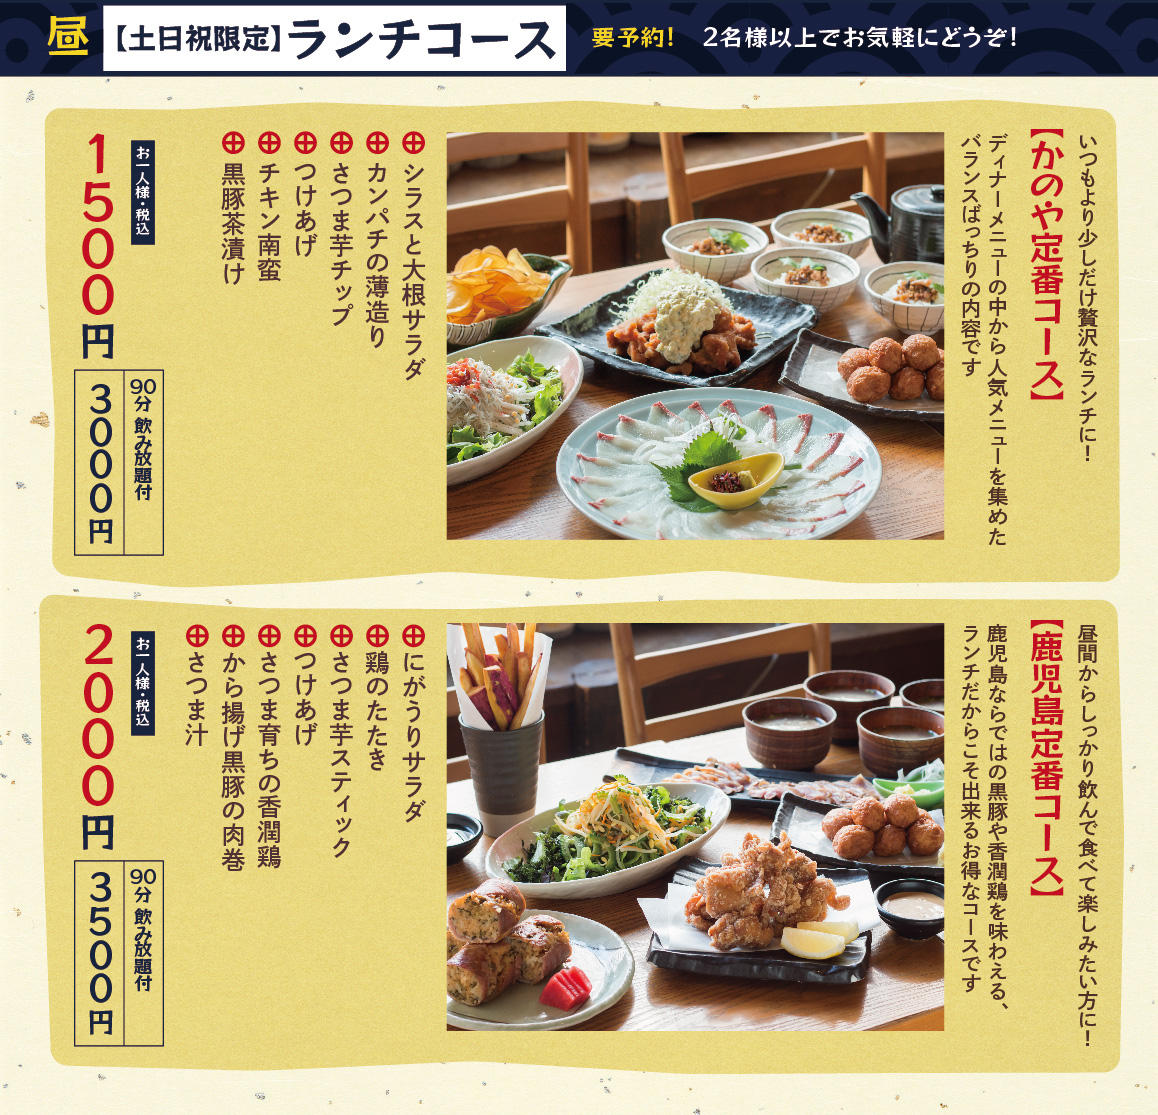 kanoya_1709_lunch_plan.jpg